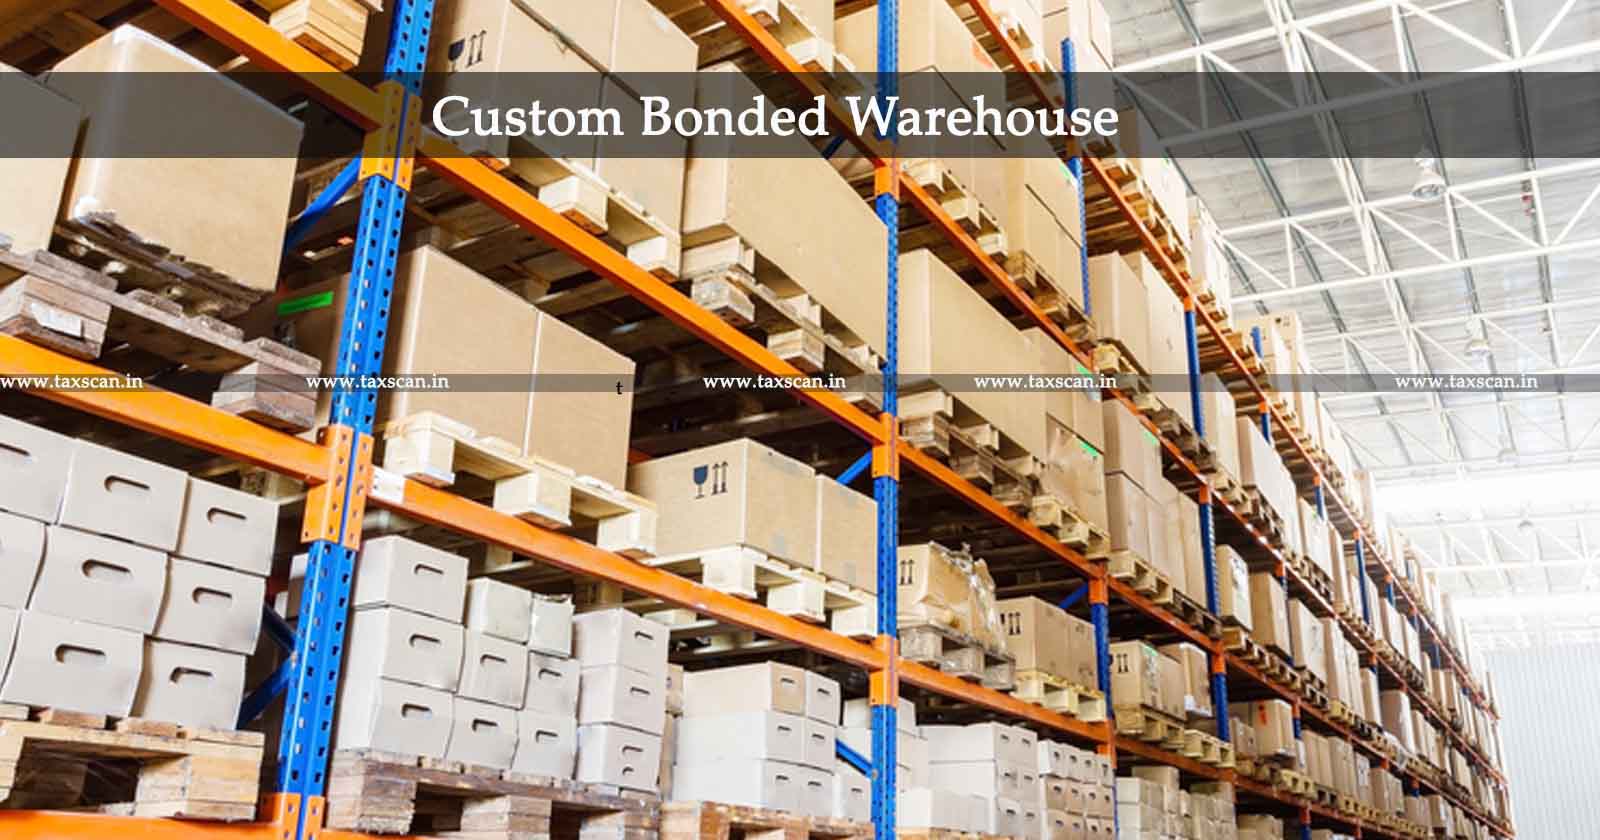 No Interest - Customs Duty payable - Warehoused Goods - Custom Bonded Warehouse - Customs Act - CESTAT - taxscan